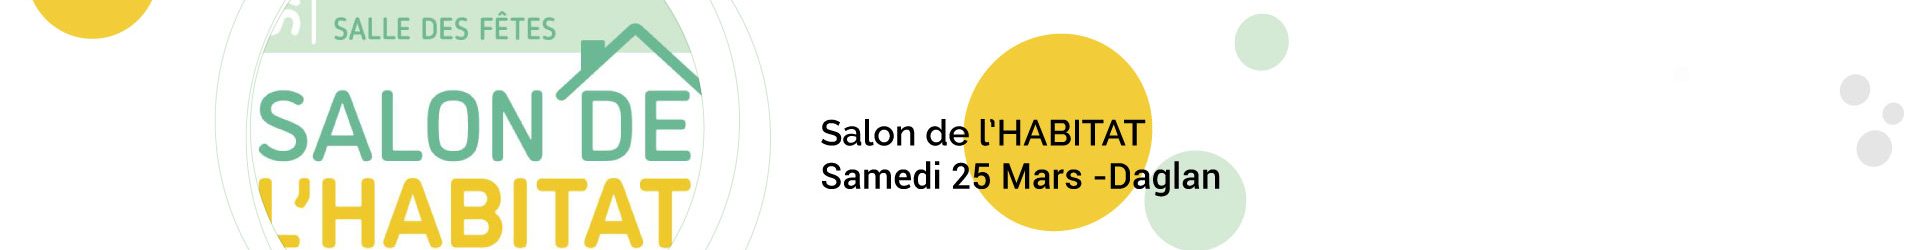 Salon de l’habitat : samedi 25 mars à Daglan